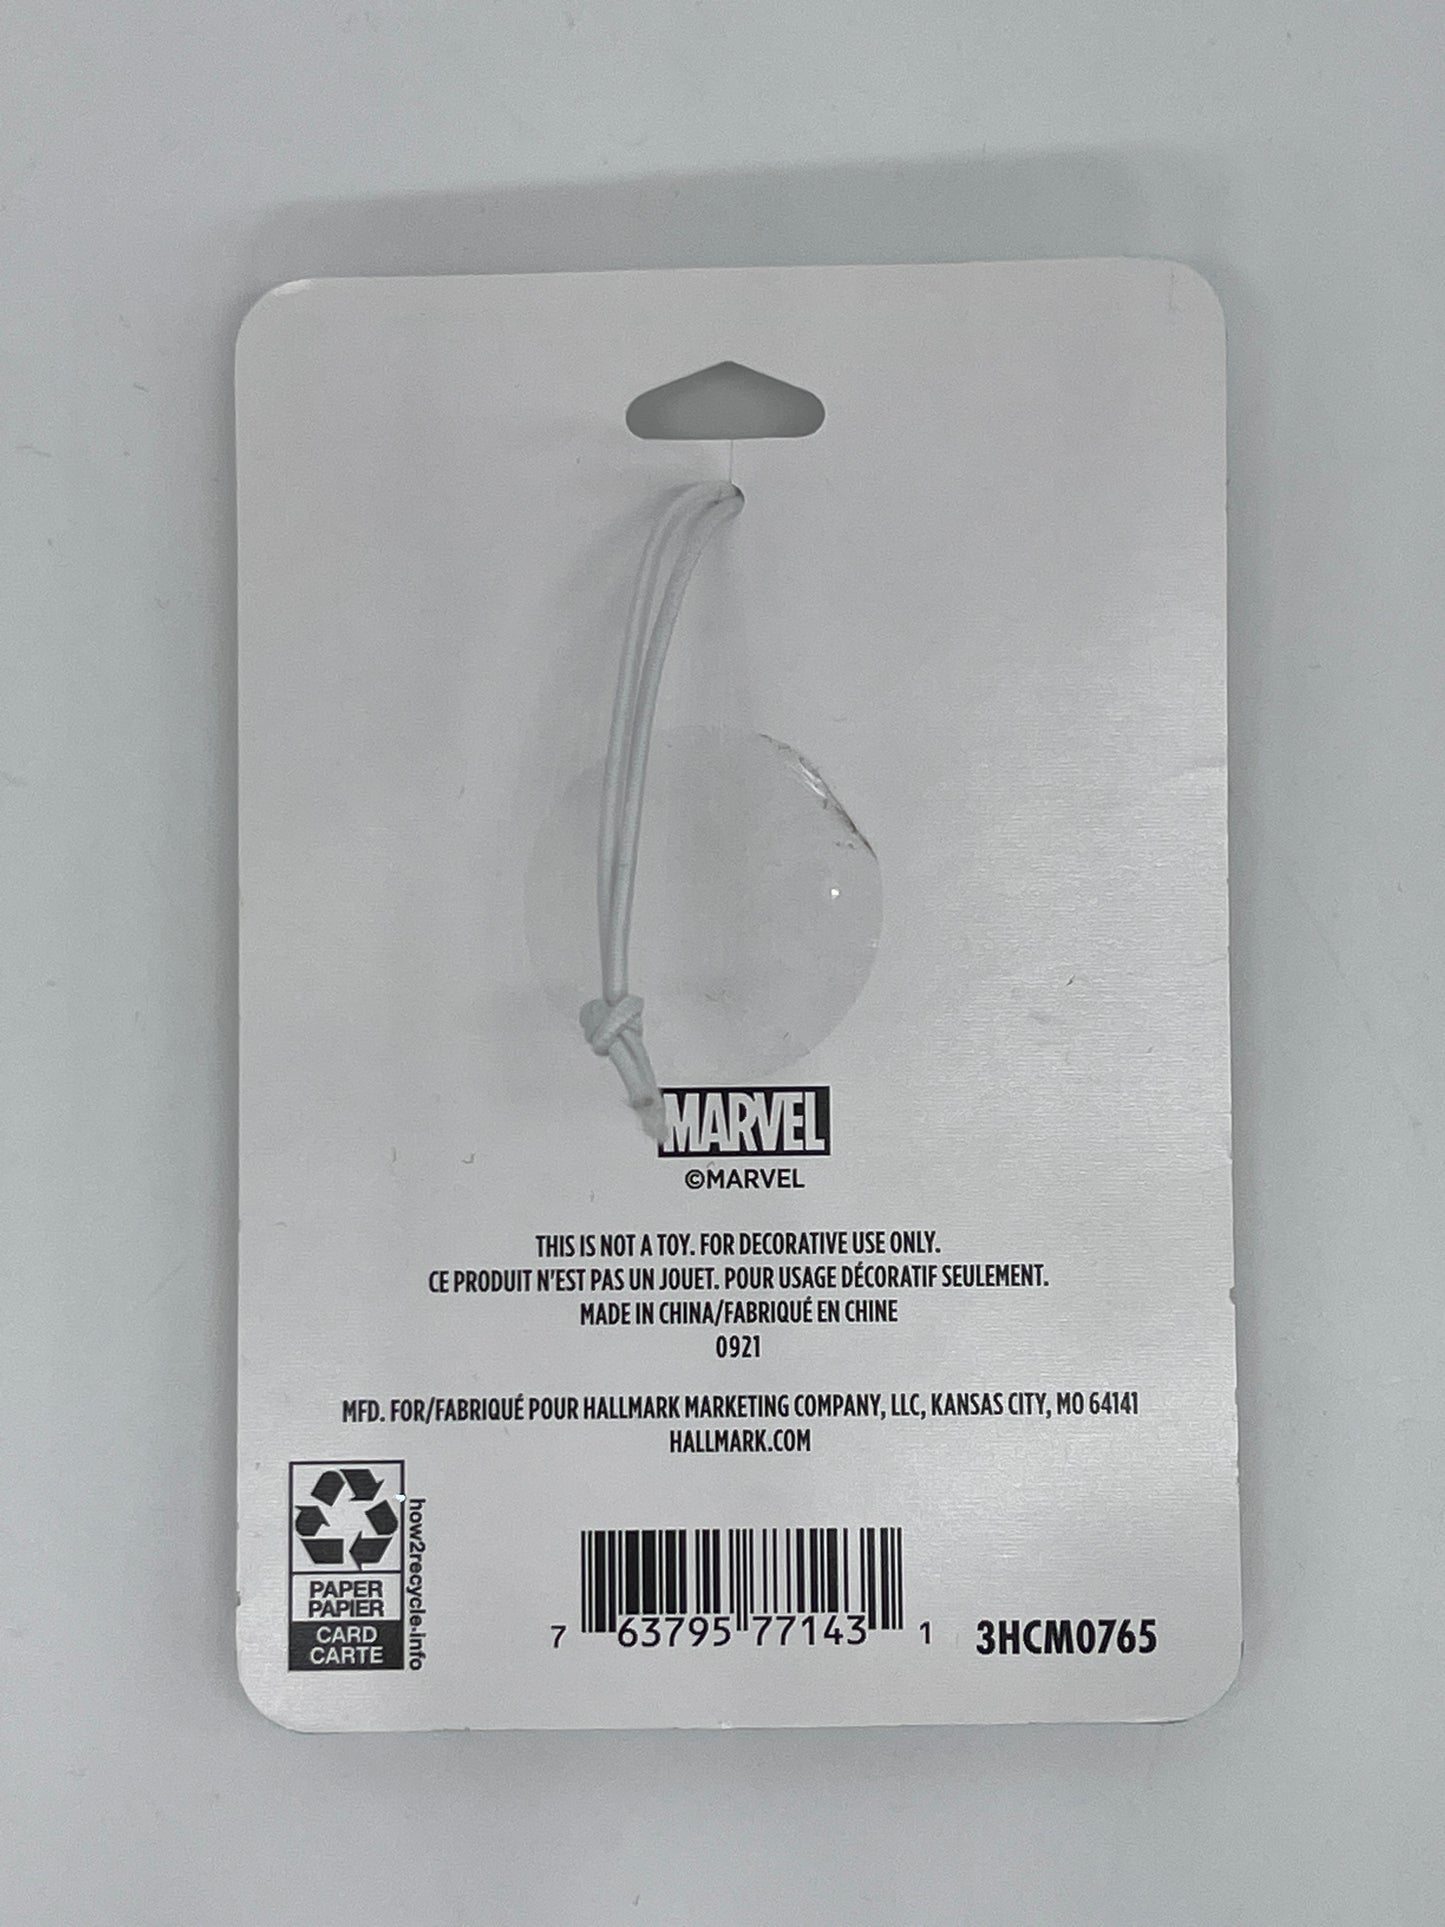 Hallmark Ornaments "Spiderman" Marvel Universum Anhänger aus Metall